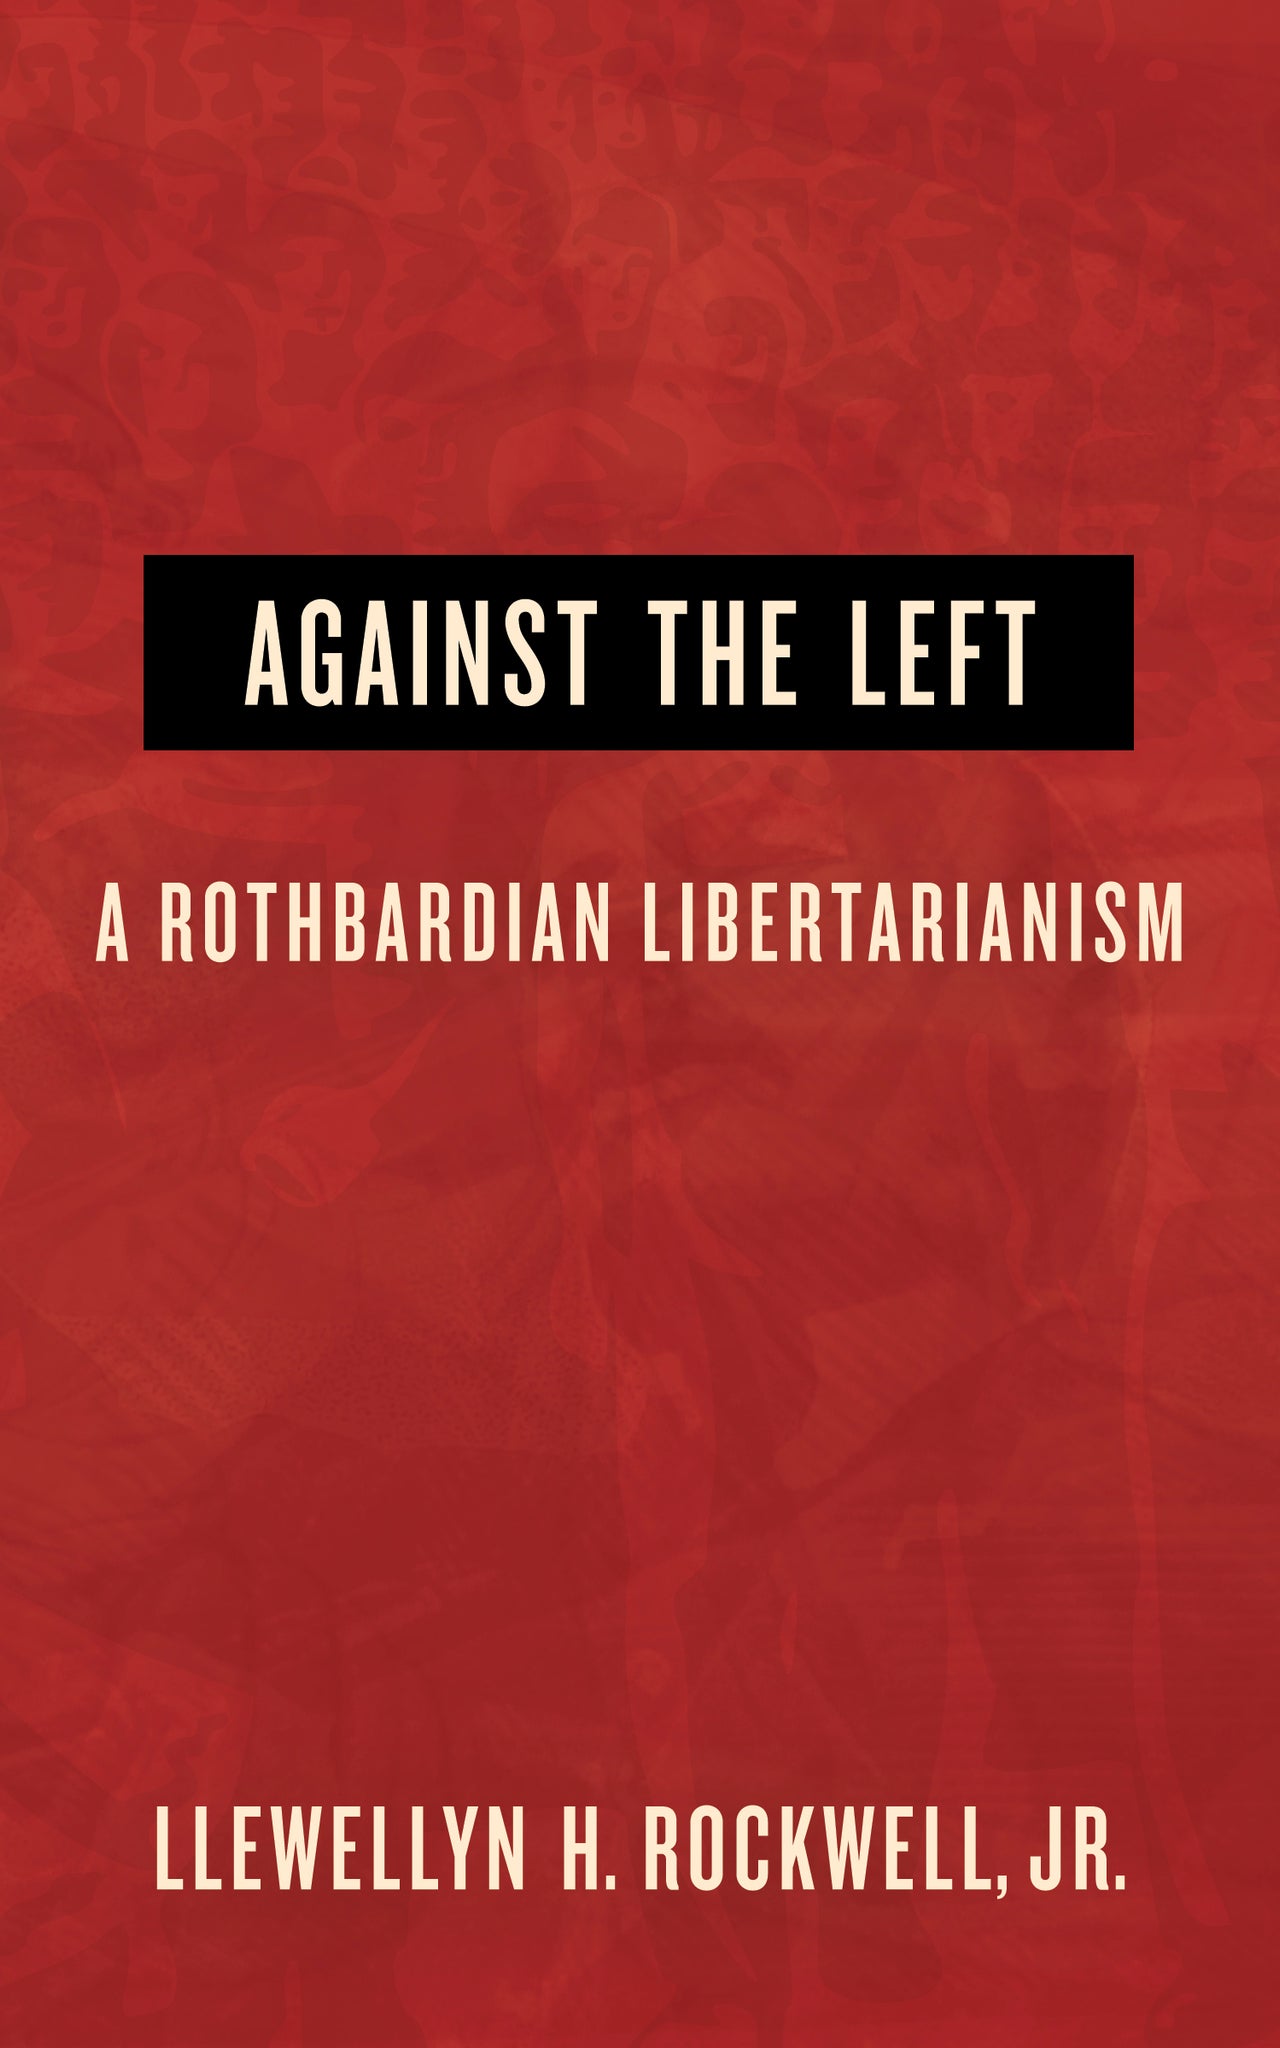 Against the Left: A Rothbardian Libertarianism